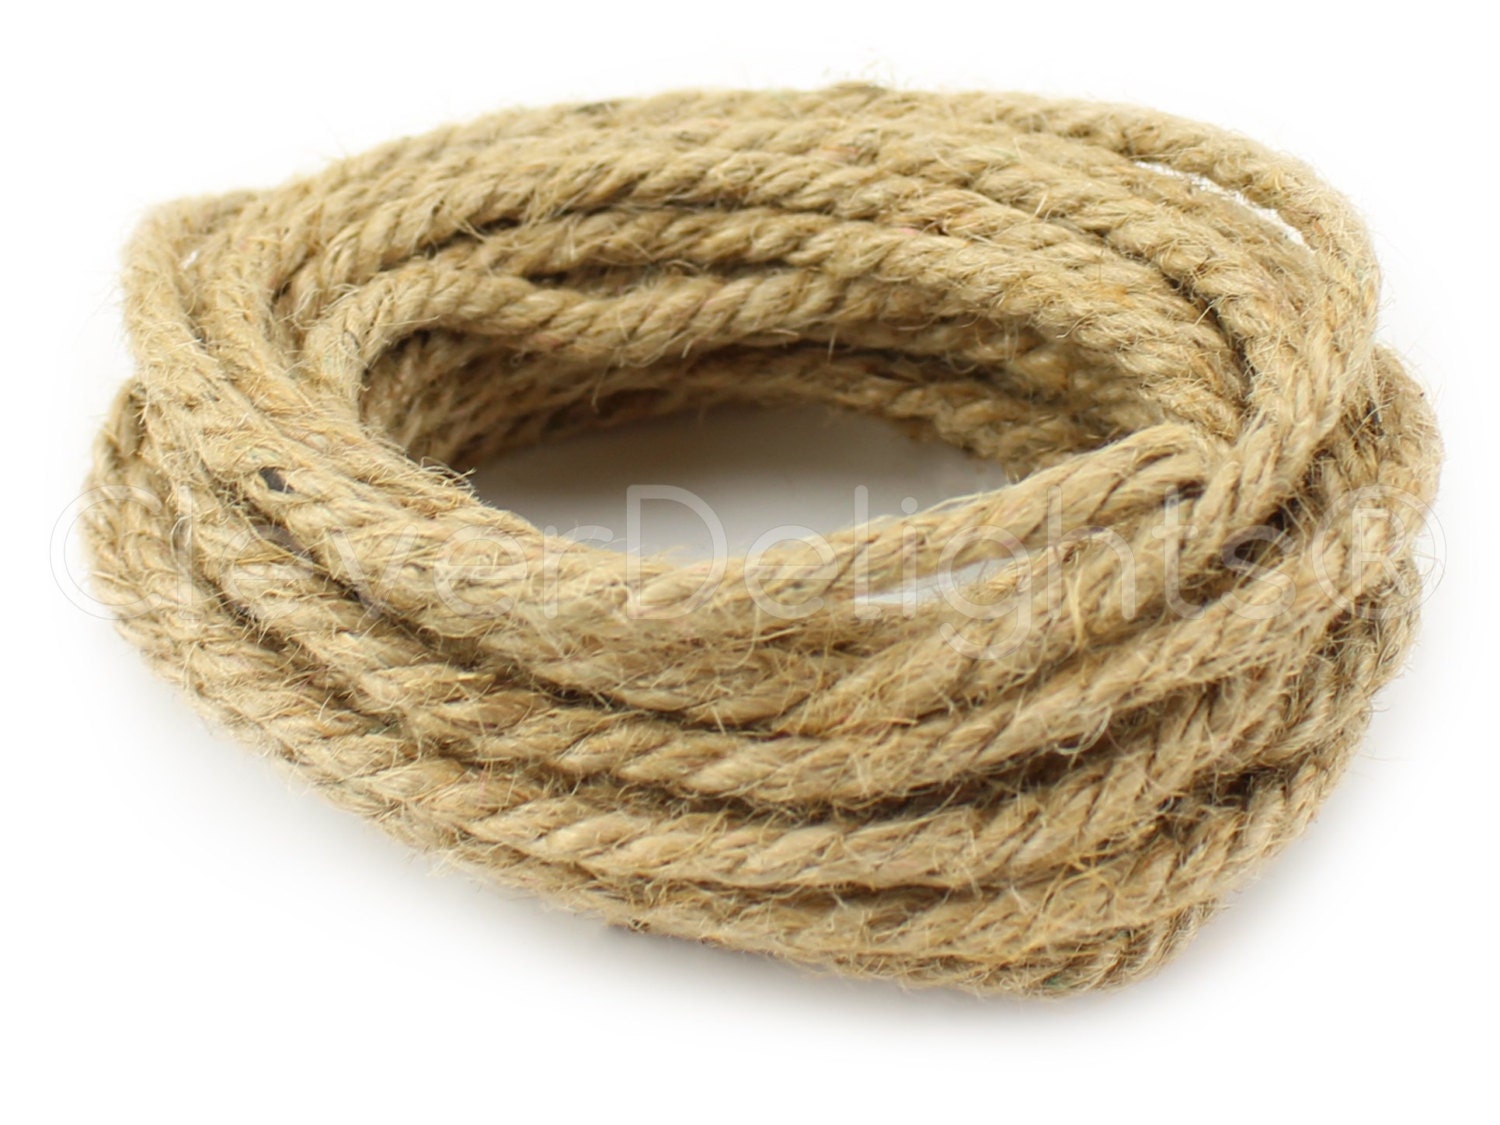 Manila hemp rope 6mm, 8m (26.25ft)